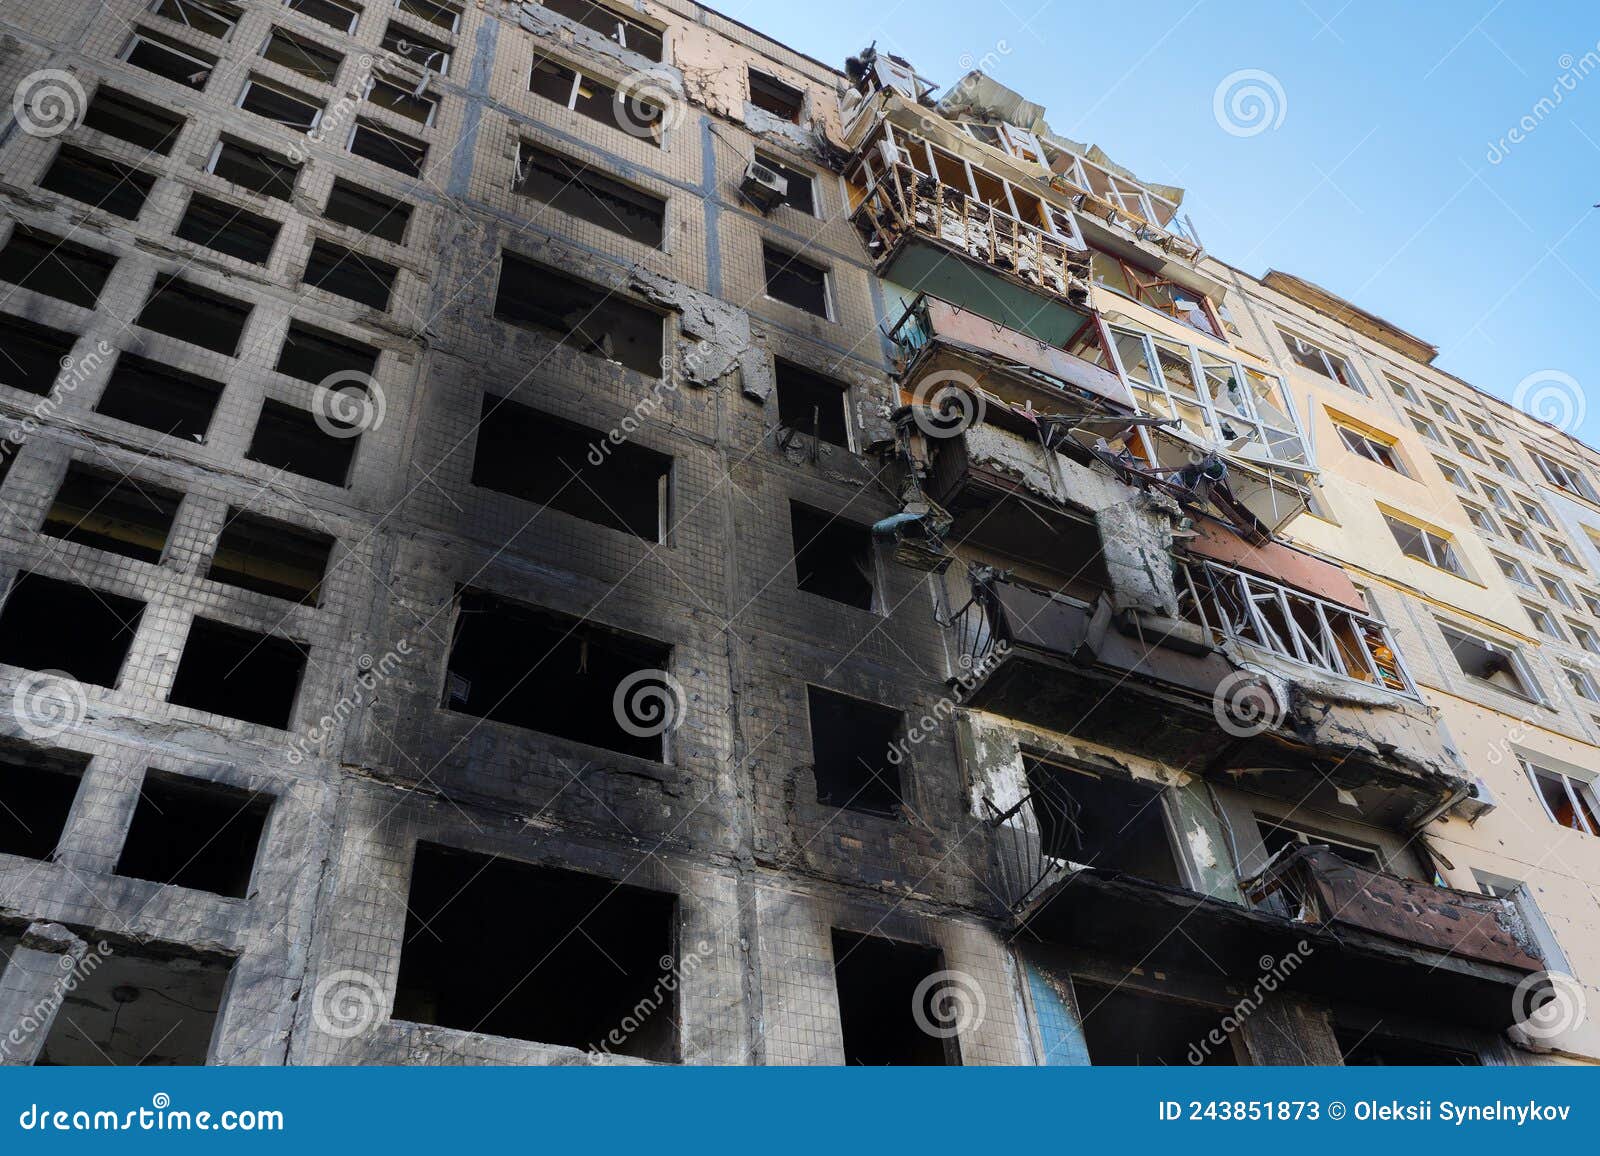 rocket bomb attack russia against ukraine war destruction building ruins city destroyed mariupol damaged kyiv ruined